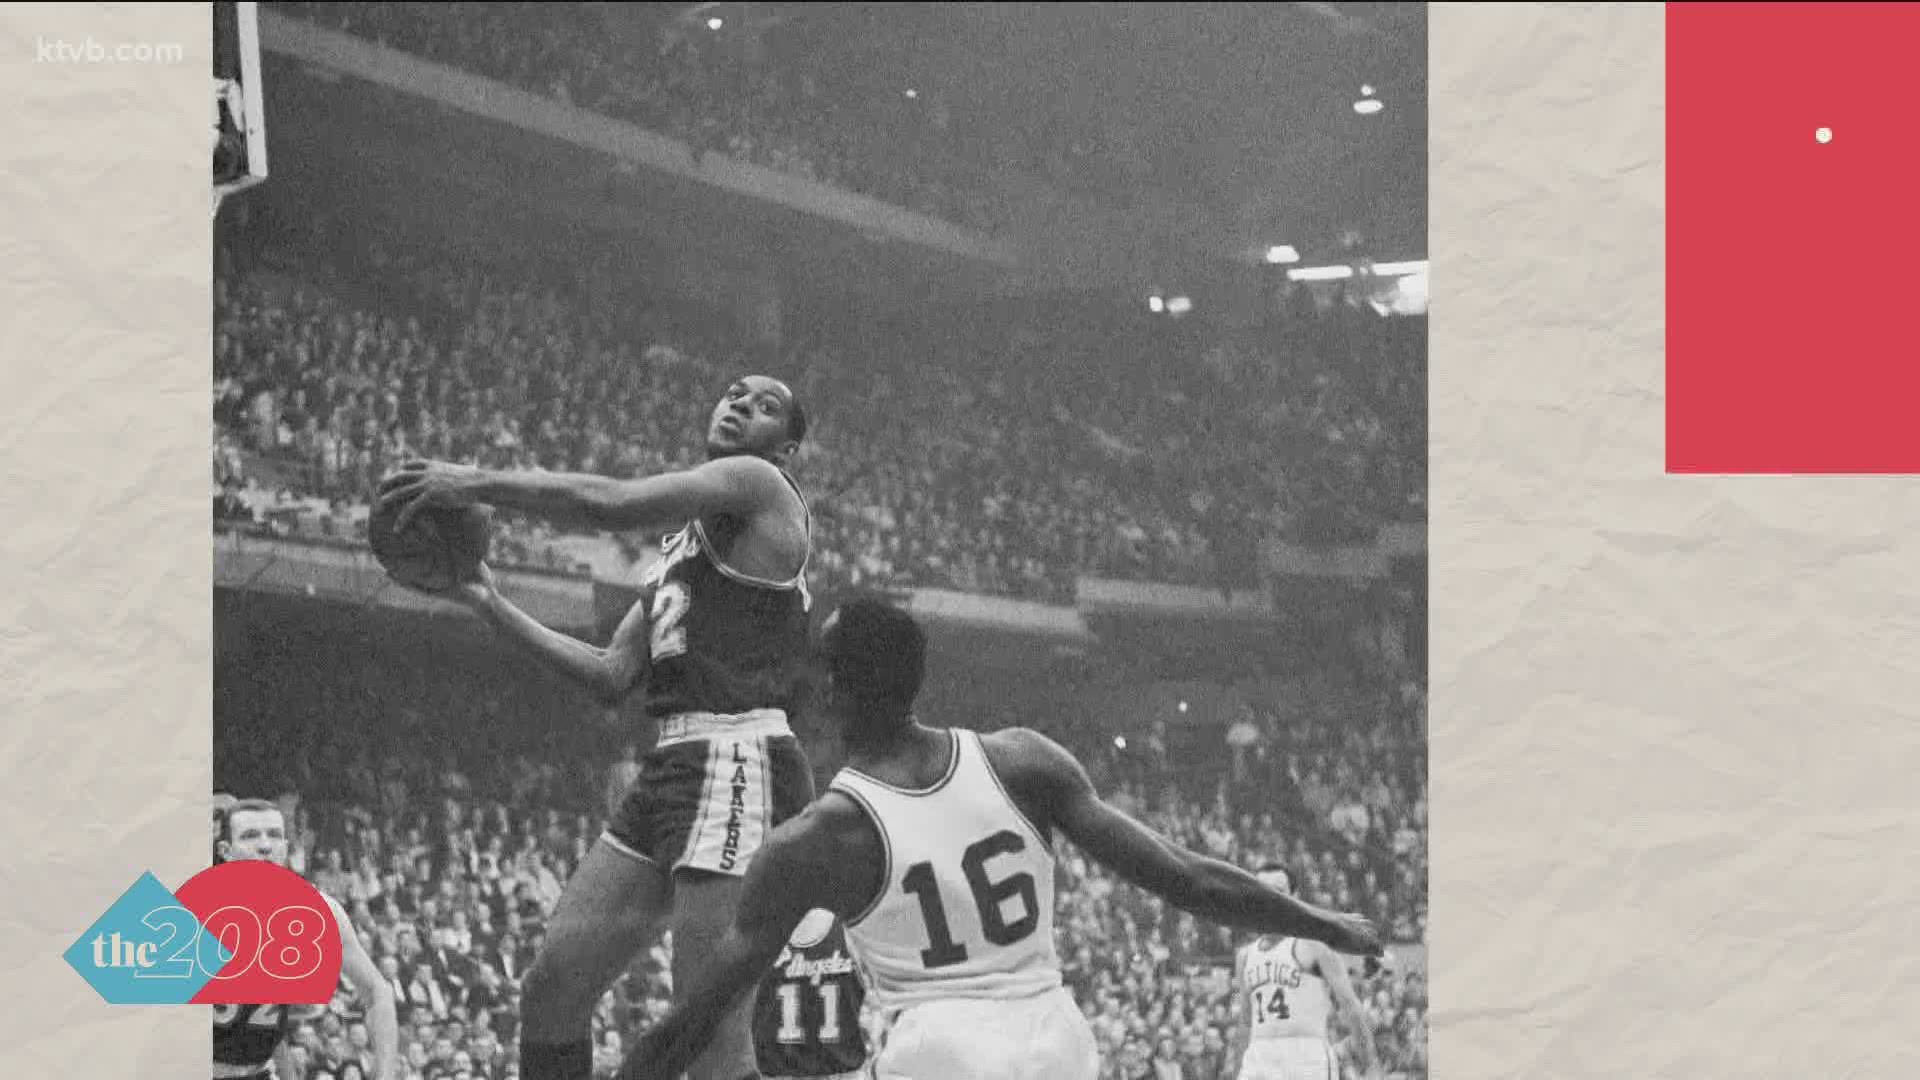 Elgin Baylor, former Lakers star and NBA Hall of Famer, dies at 86